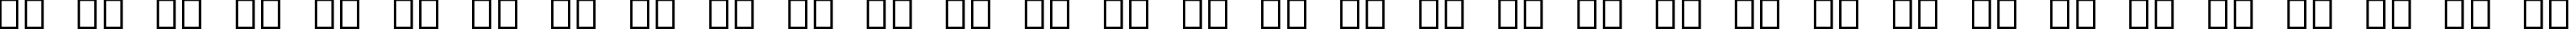 Пример написания русского алфавита шрифтом Cornerstone